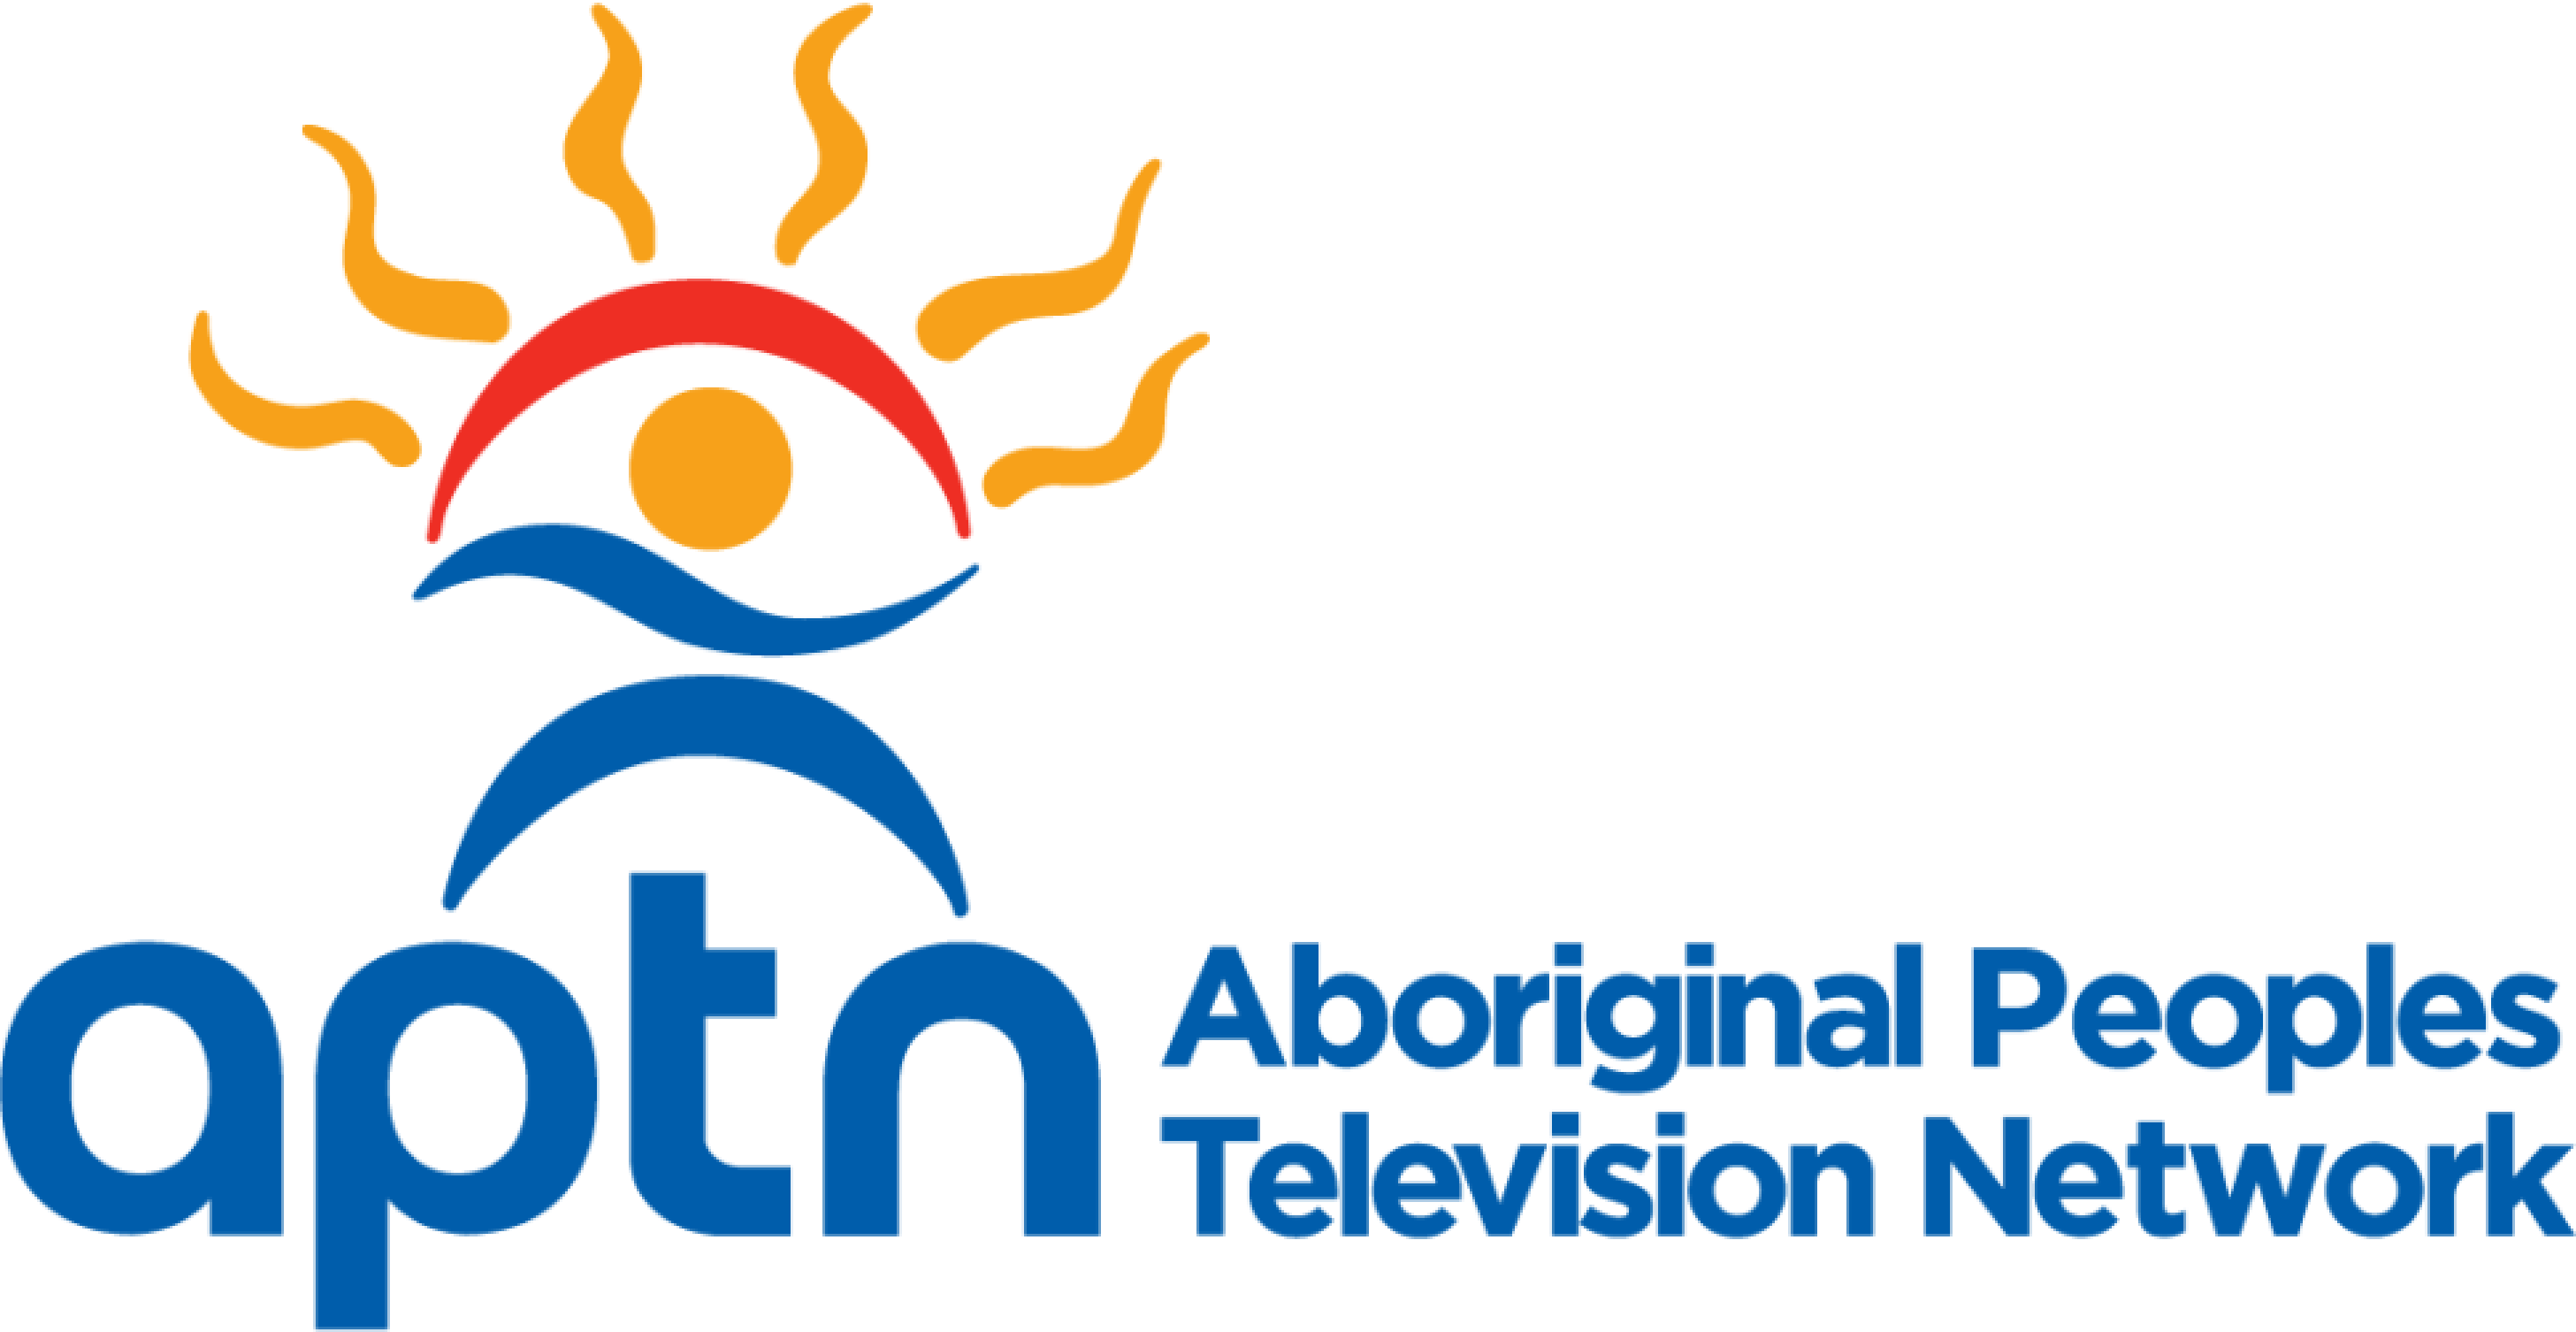 APTN Aboriginal Peoples Television Network Logo